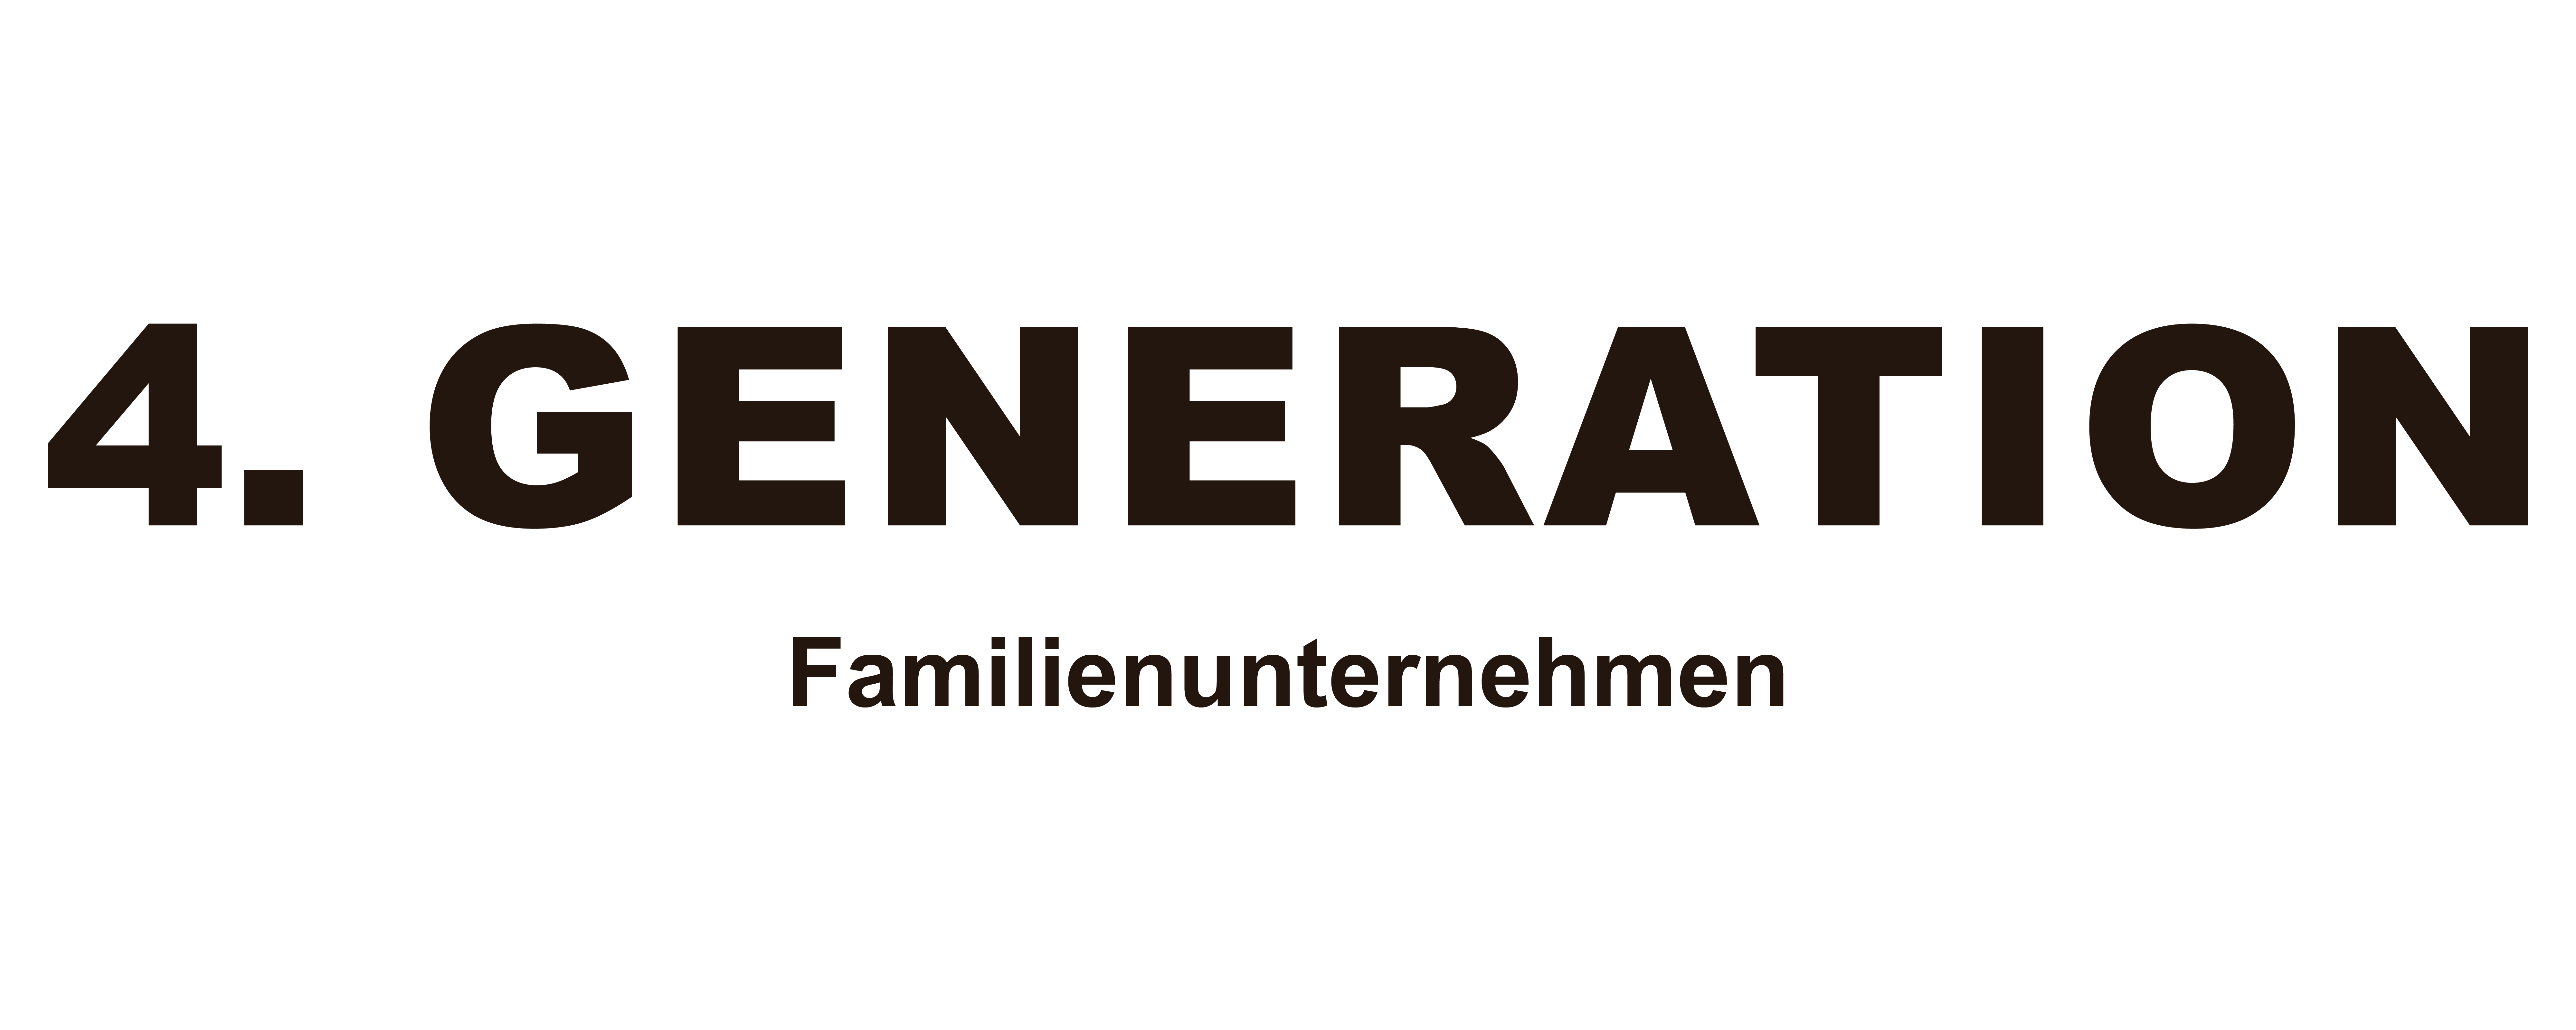 4. Generation im Familienunternehmen